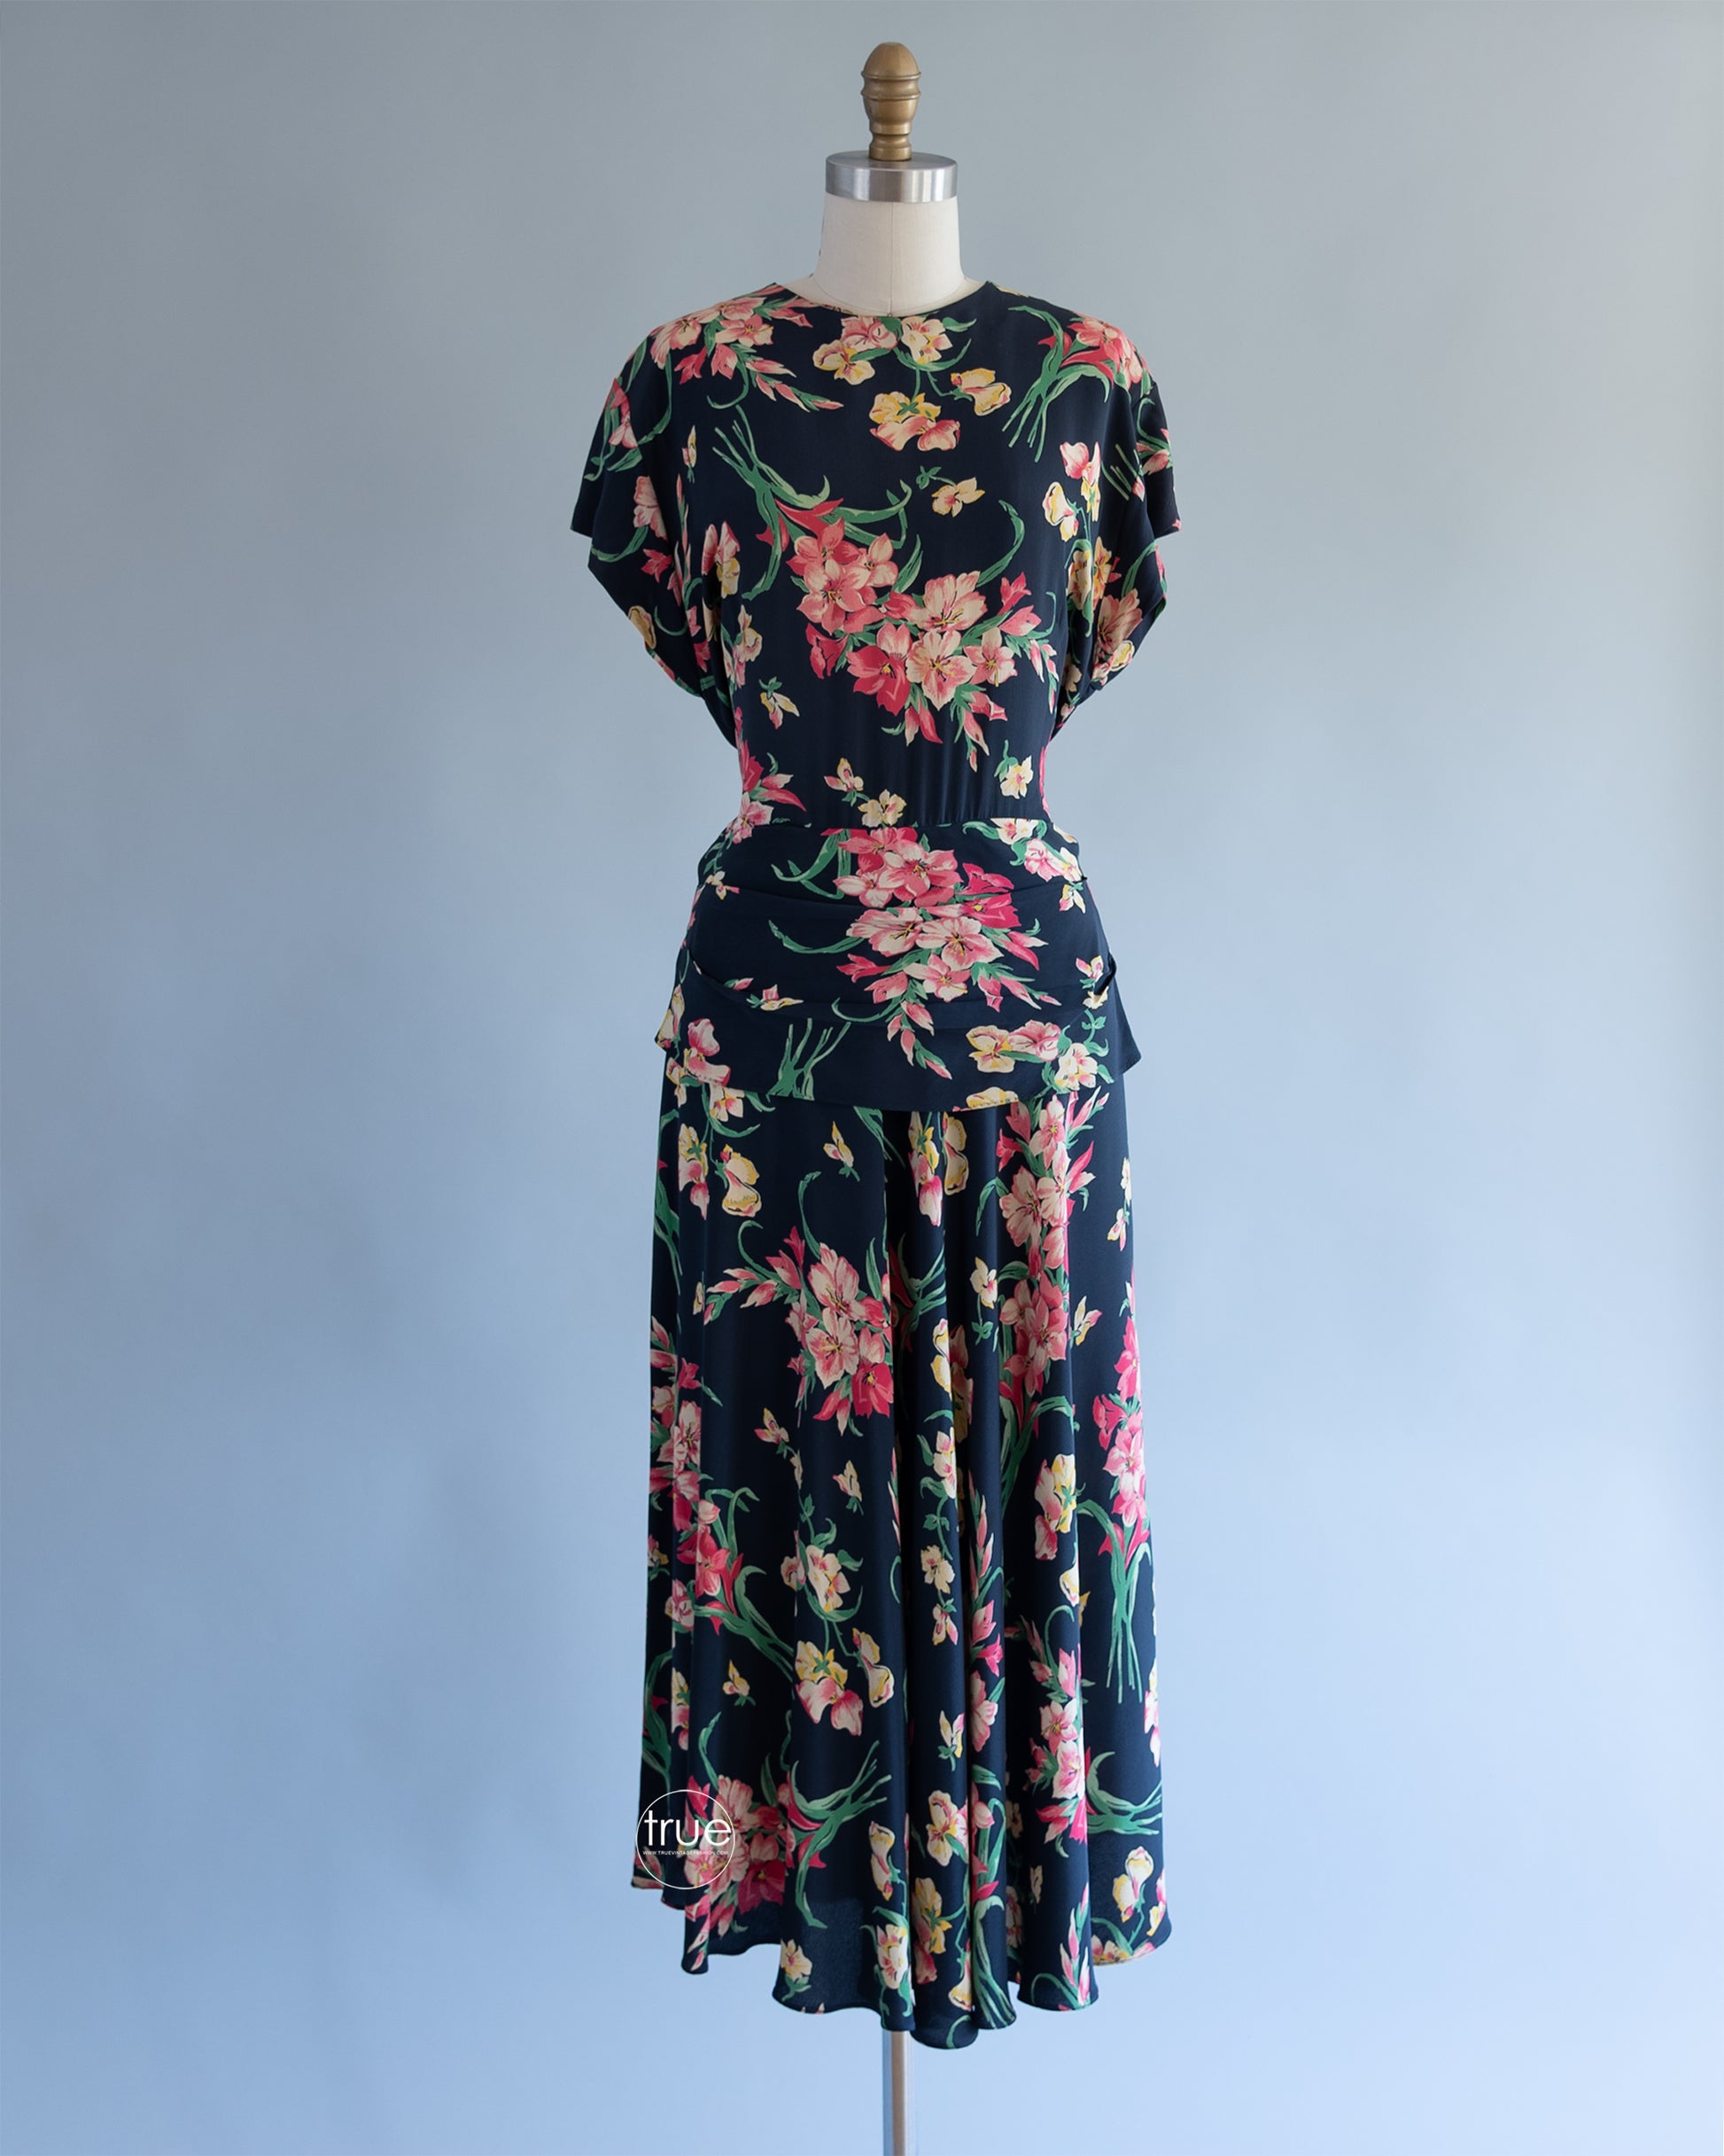 1940's dress